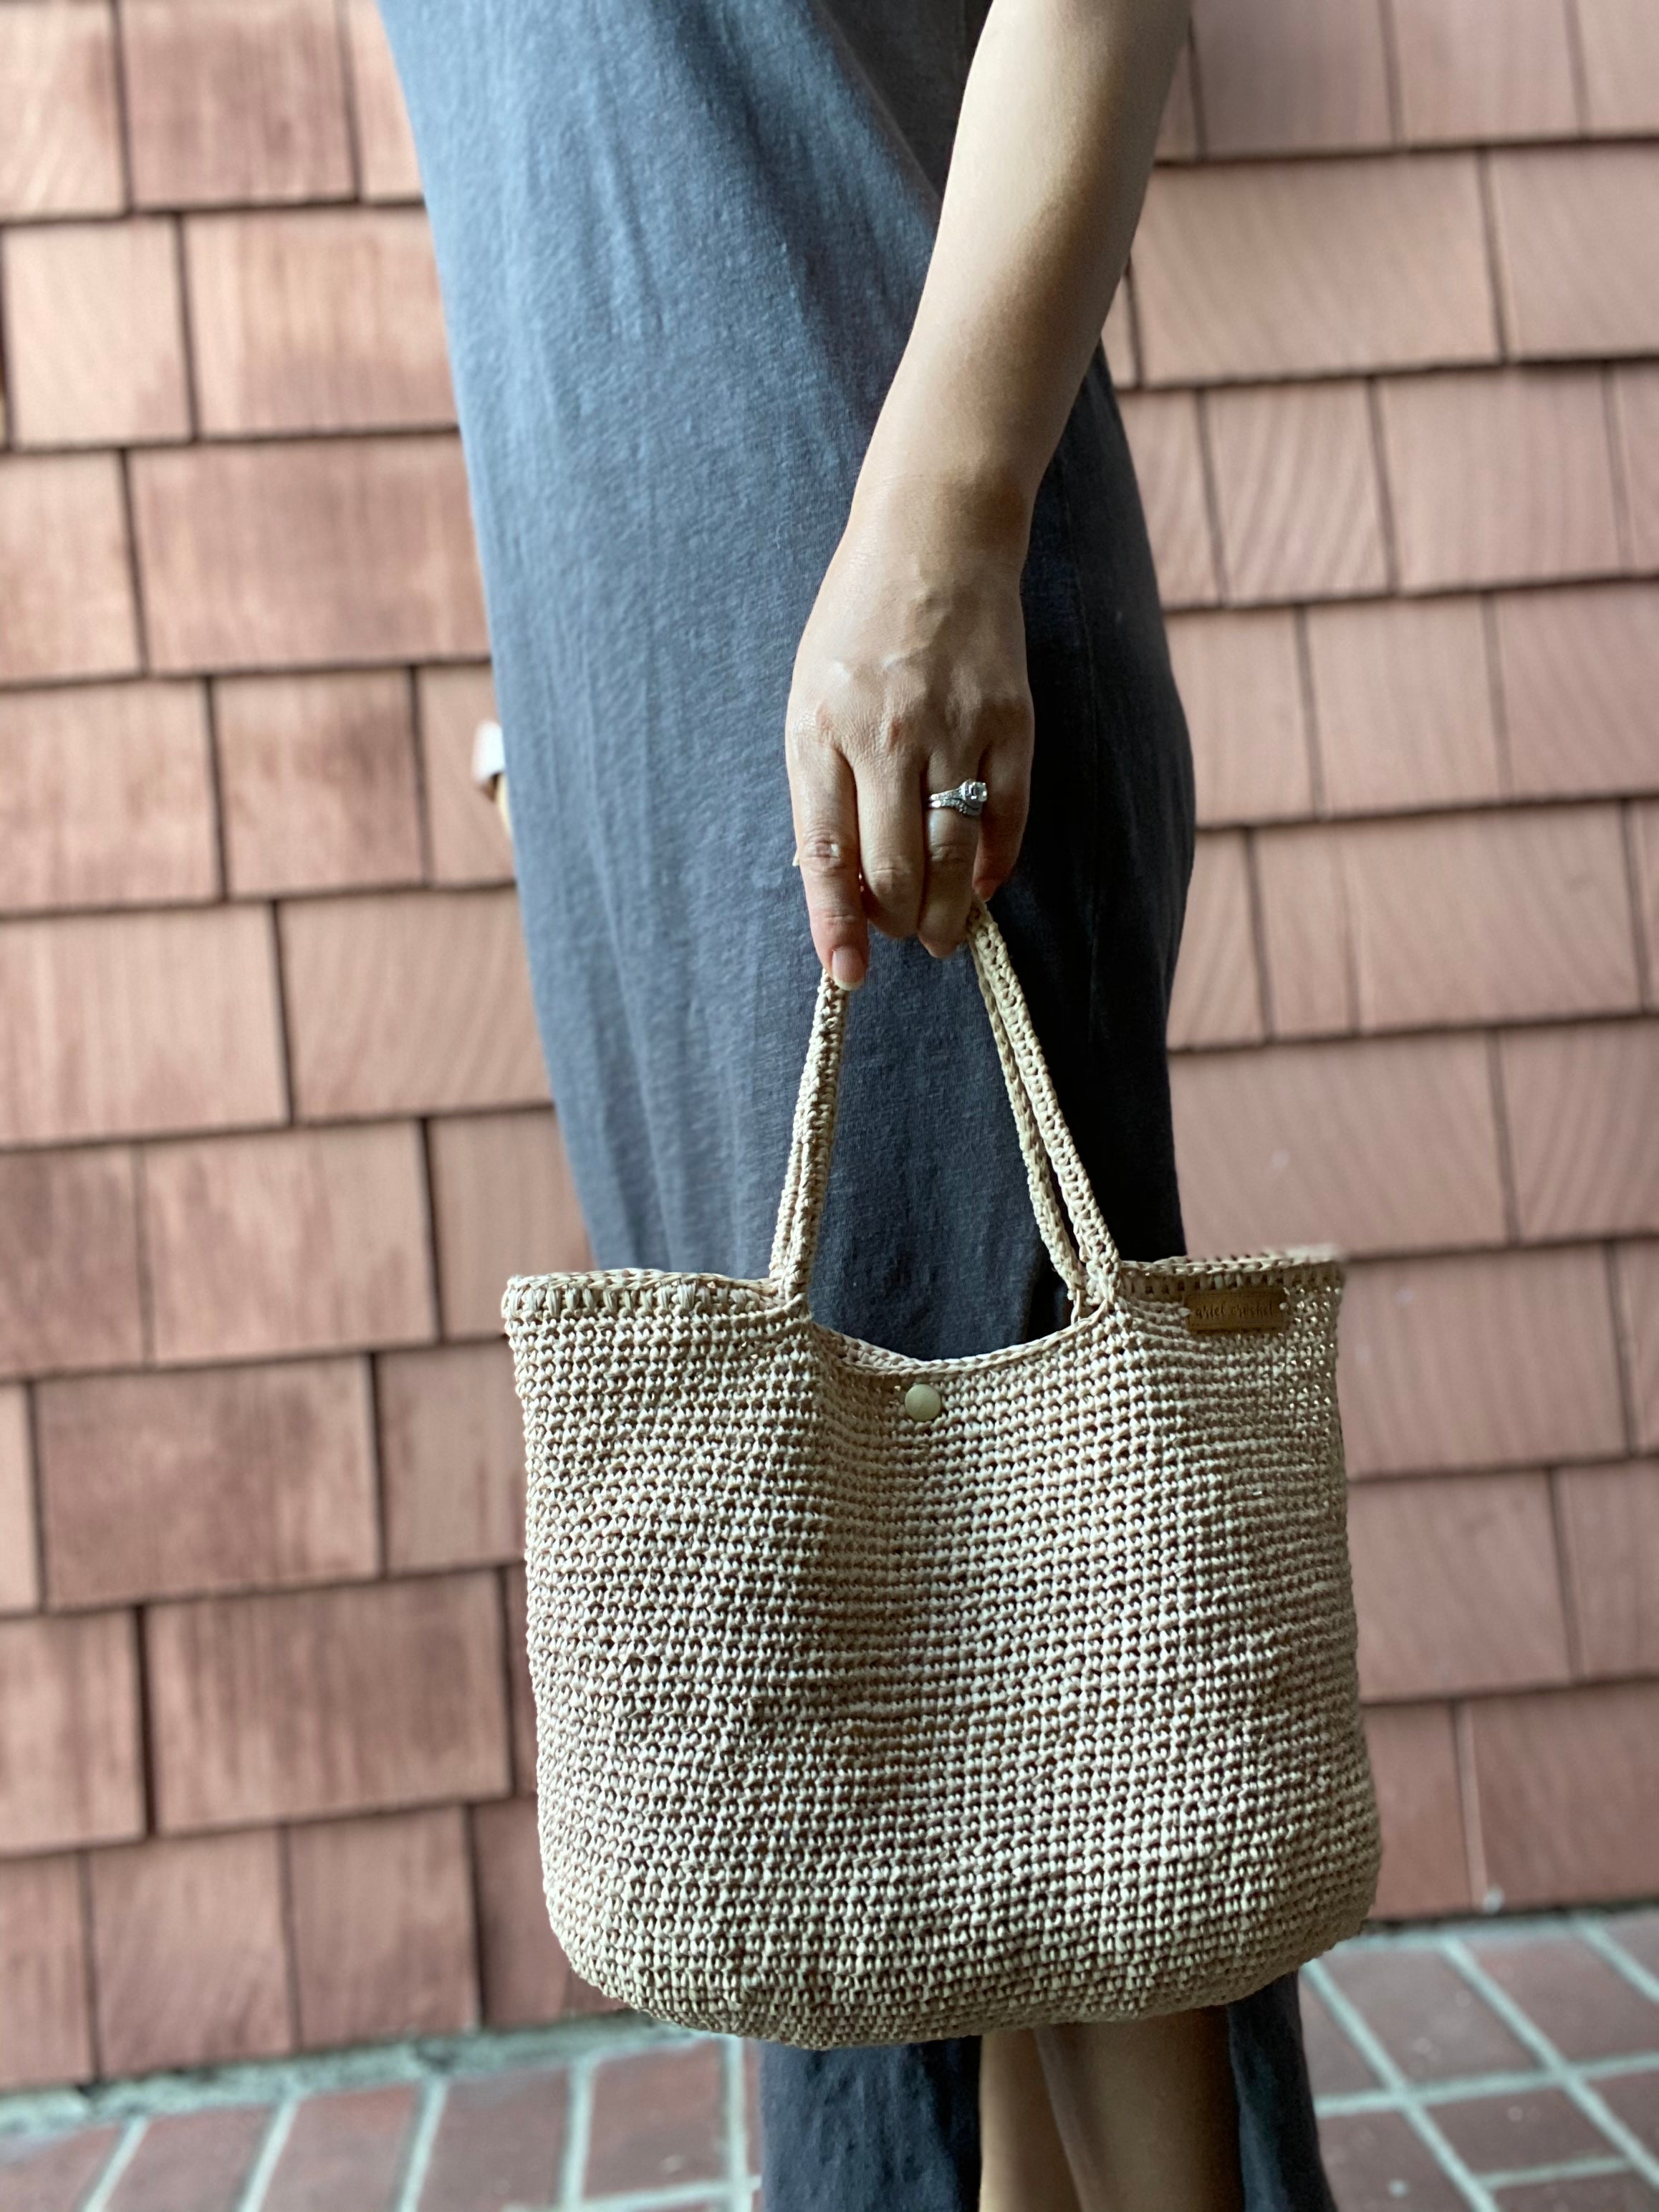 mm crochet straw purse